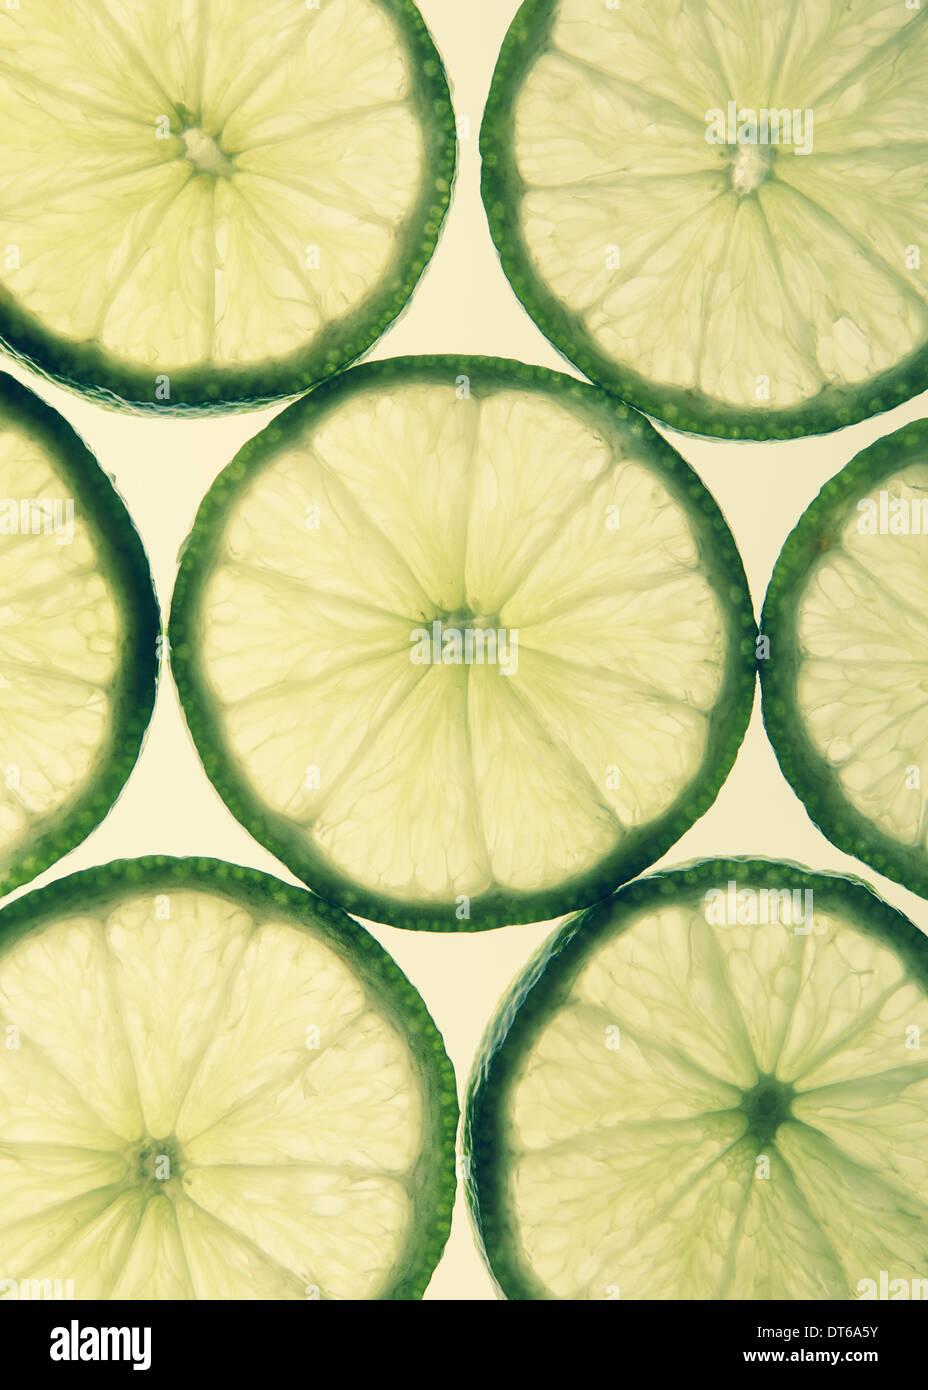 Organic lime slices on white background Stock Photo